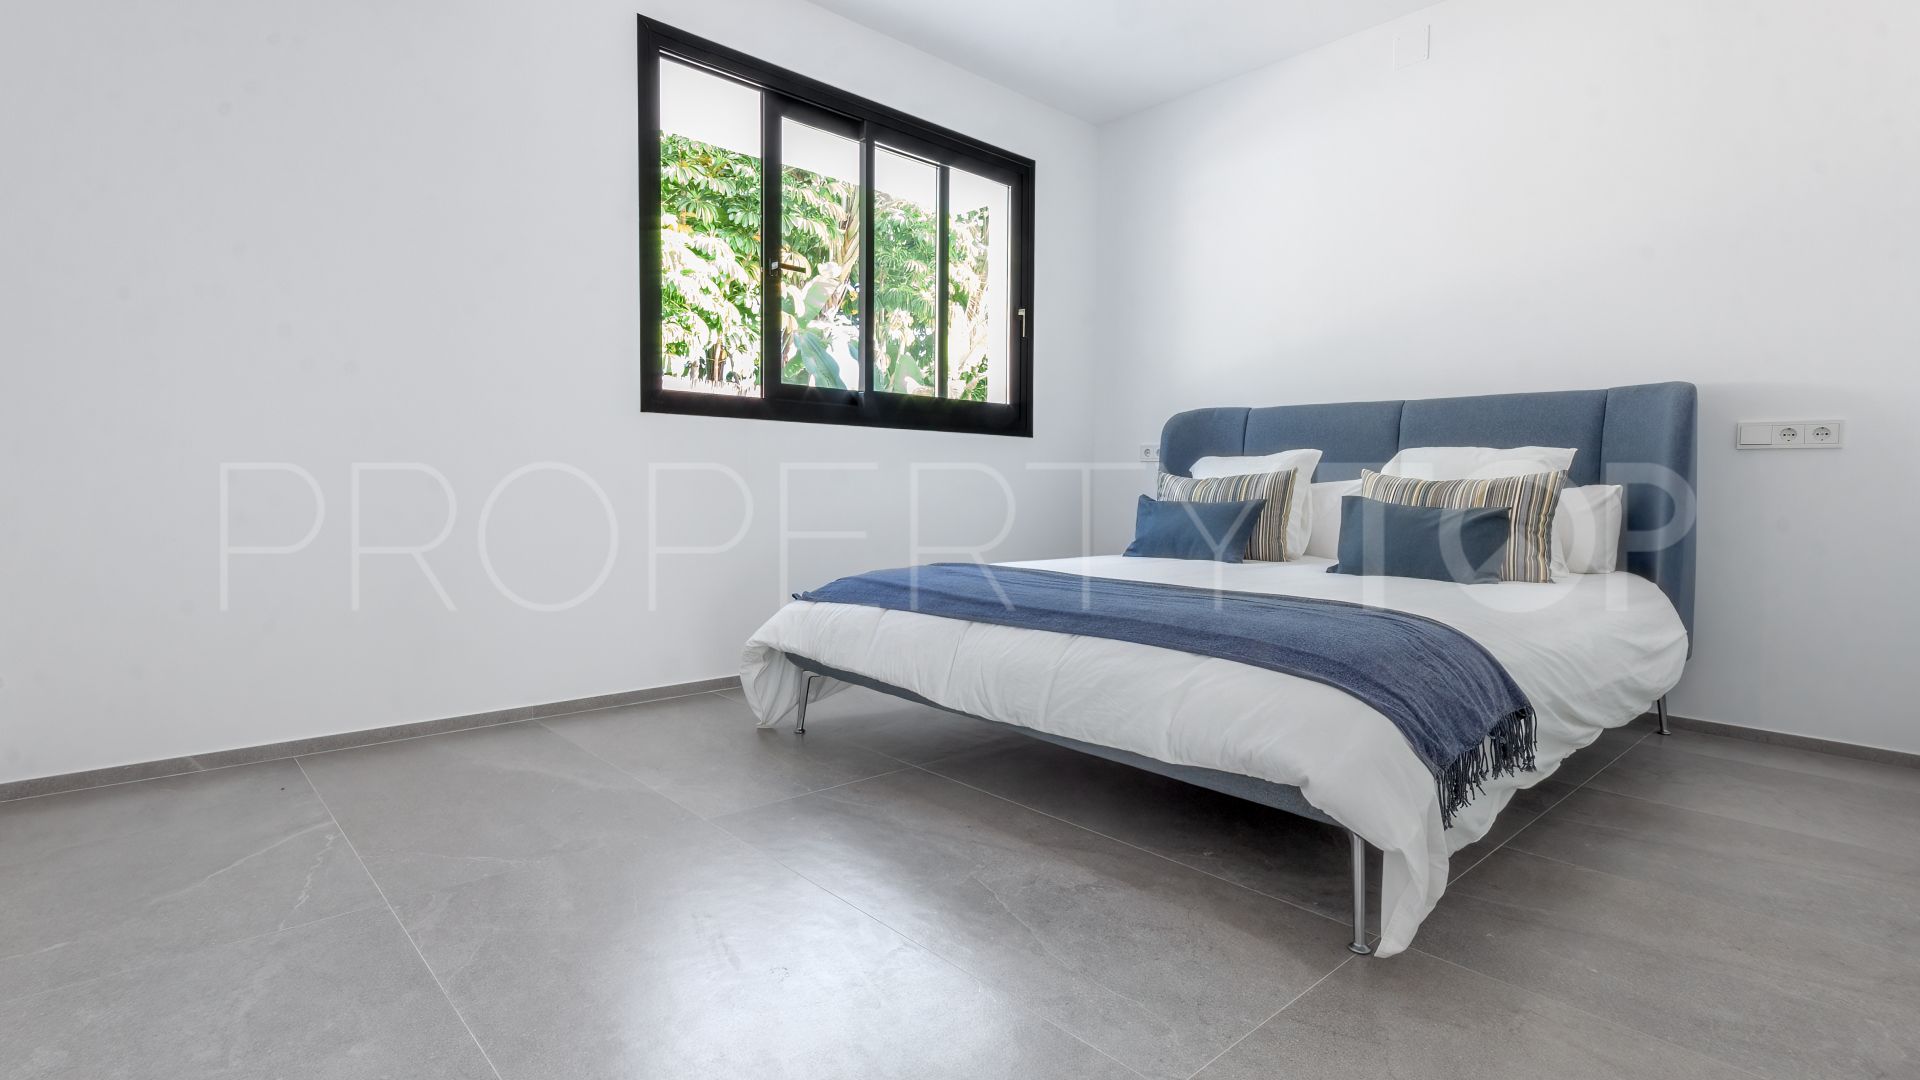 For sale villa in Cap Marti with 3 bedrooms